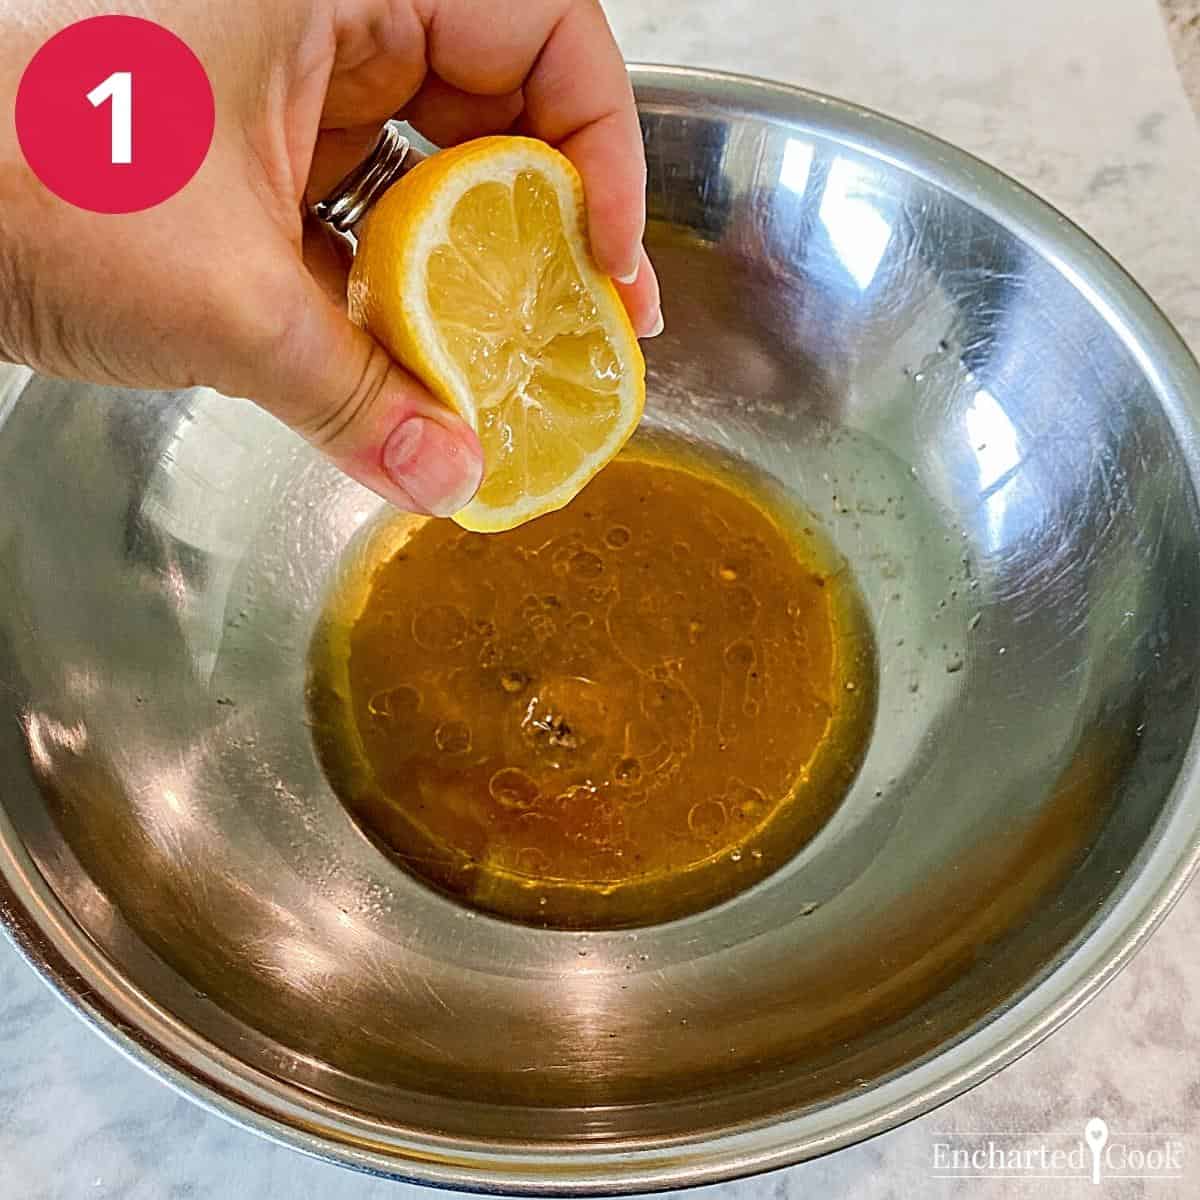 Squeezing fresh lemon juice by hand into Italian salad dressing.